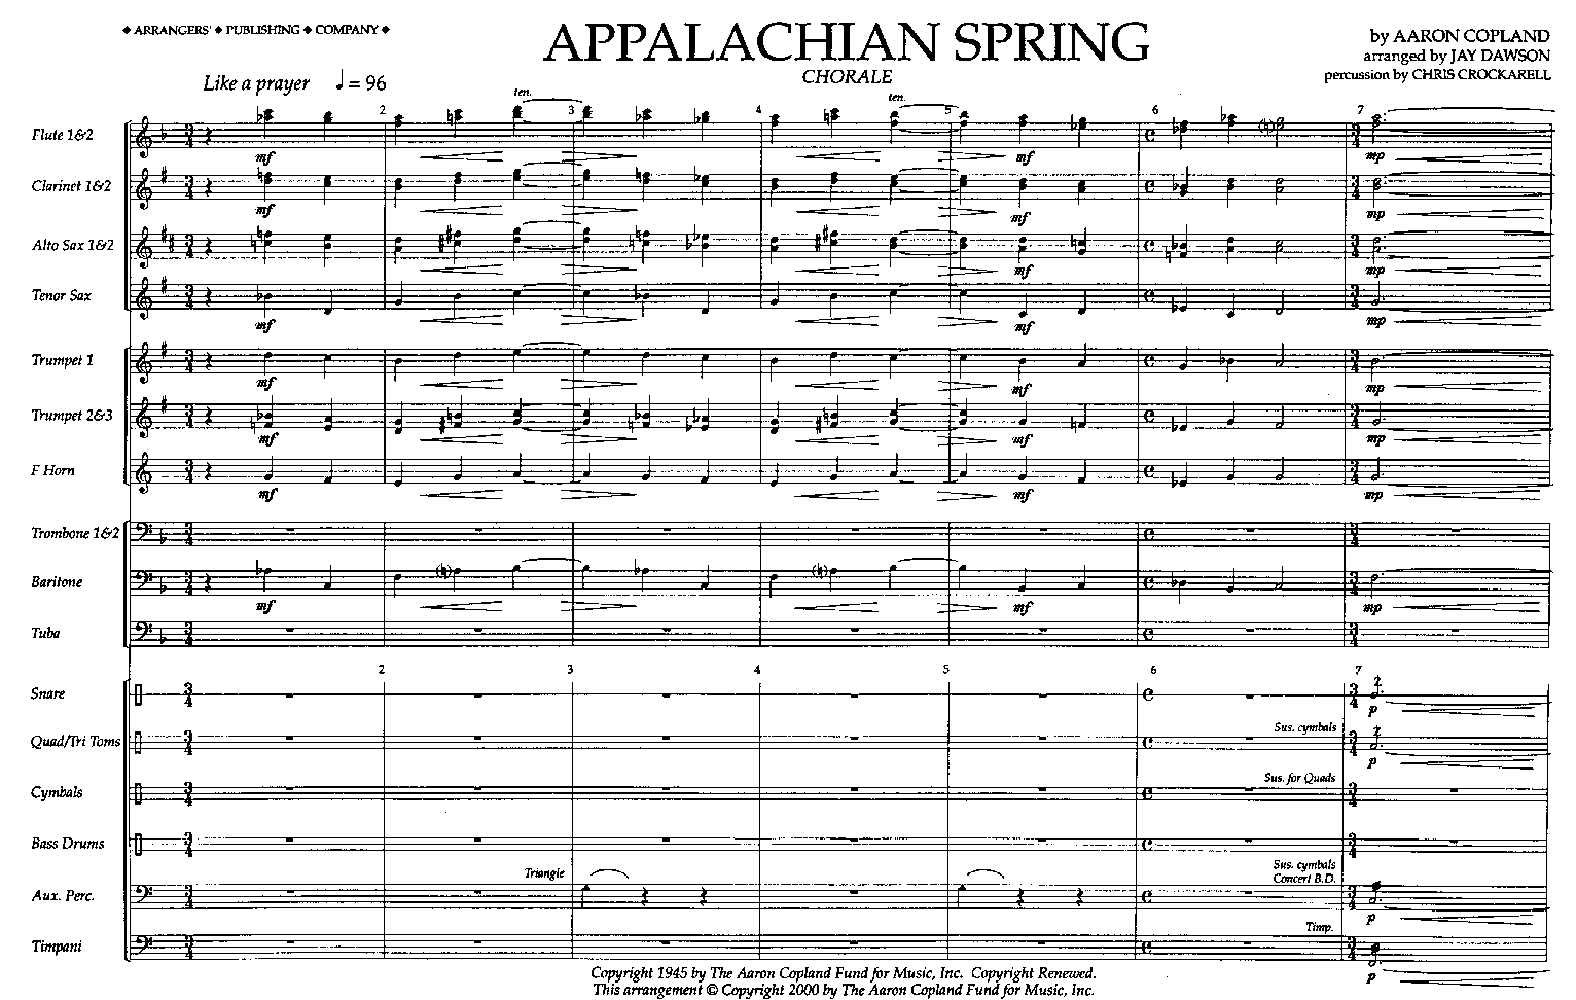 Aaron copland appalachian spring score